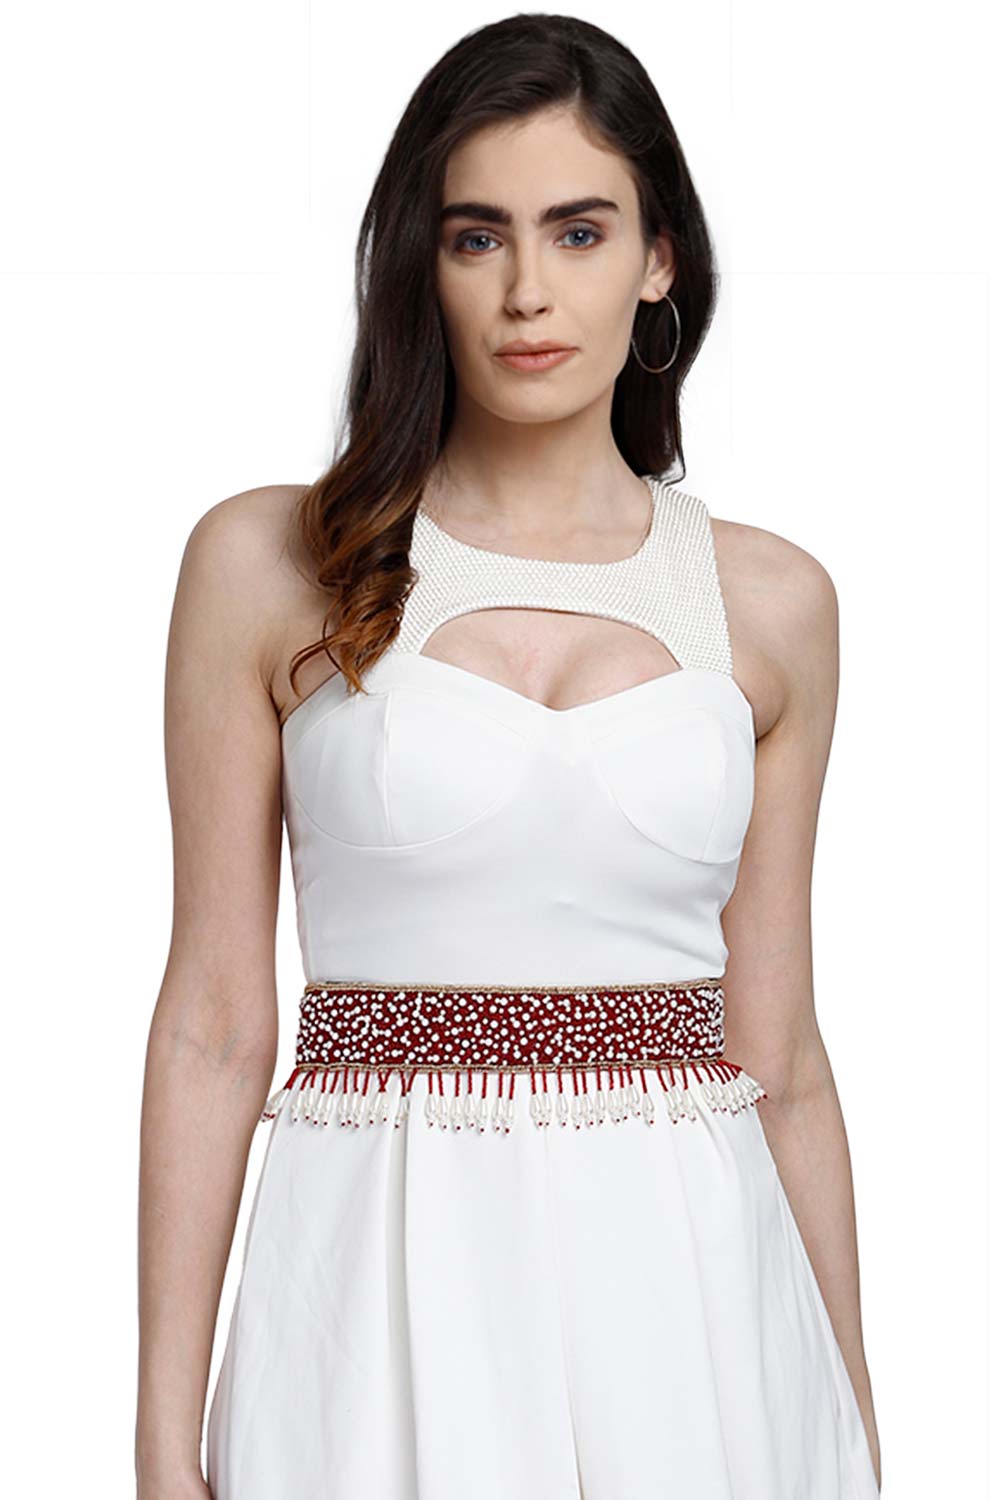 Buy Tasselled with Bead Work Waist Belt in Red & White Online